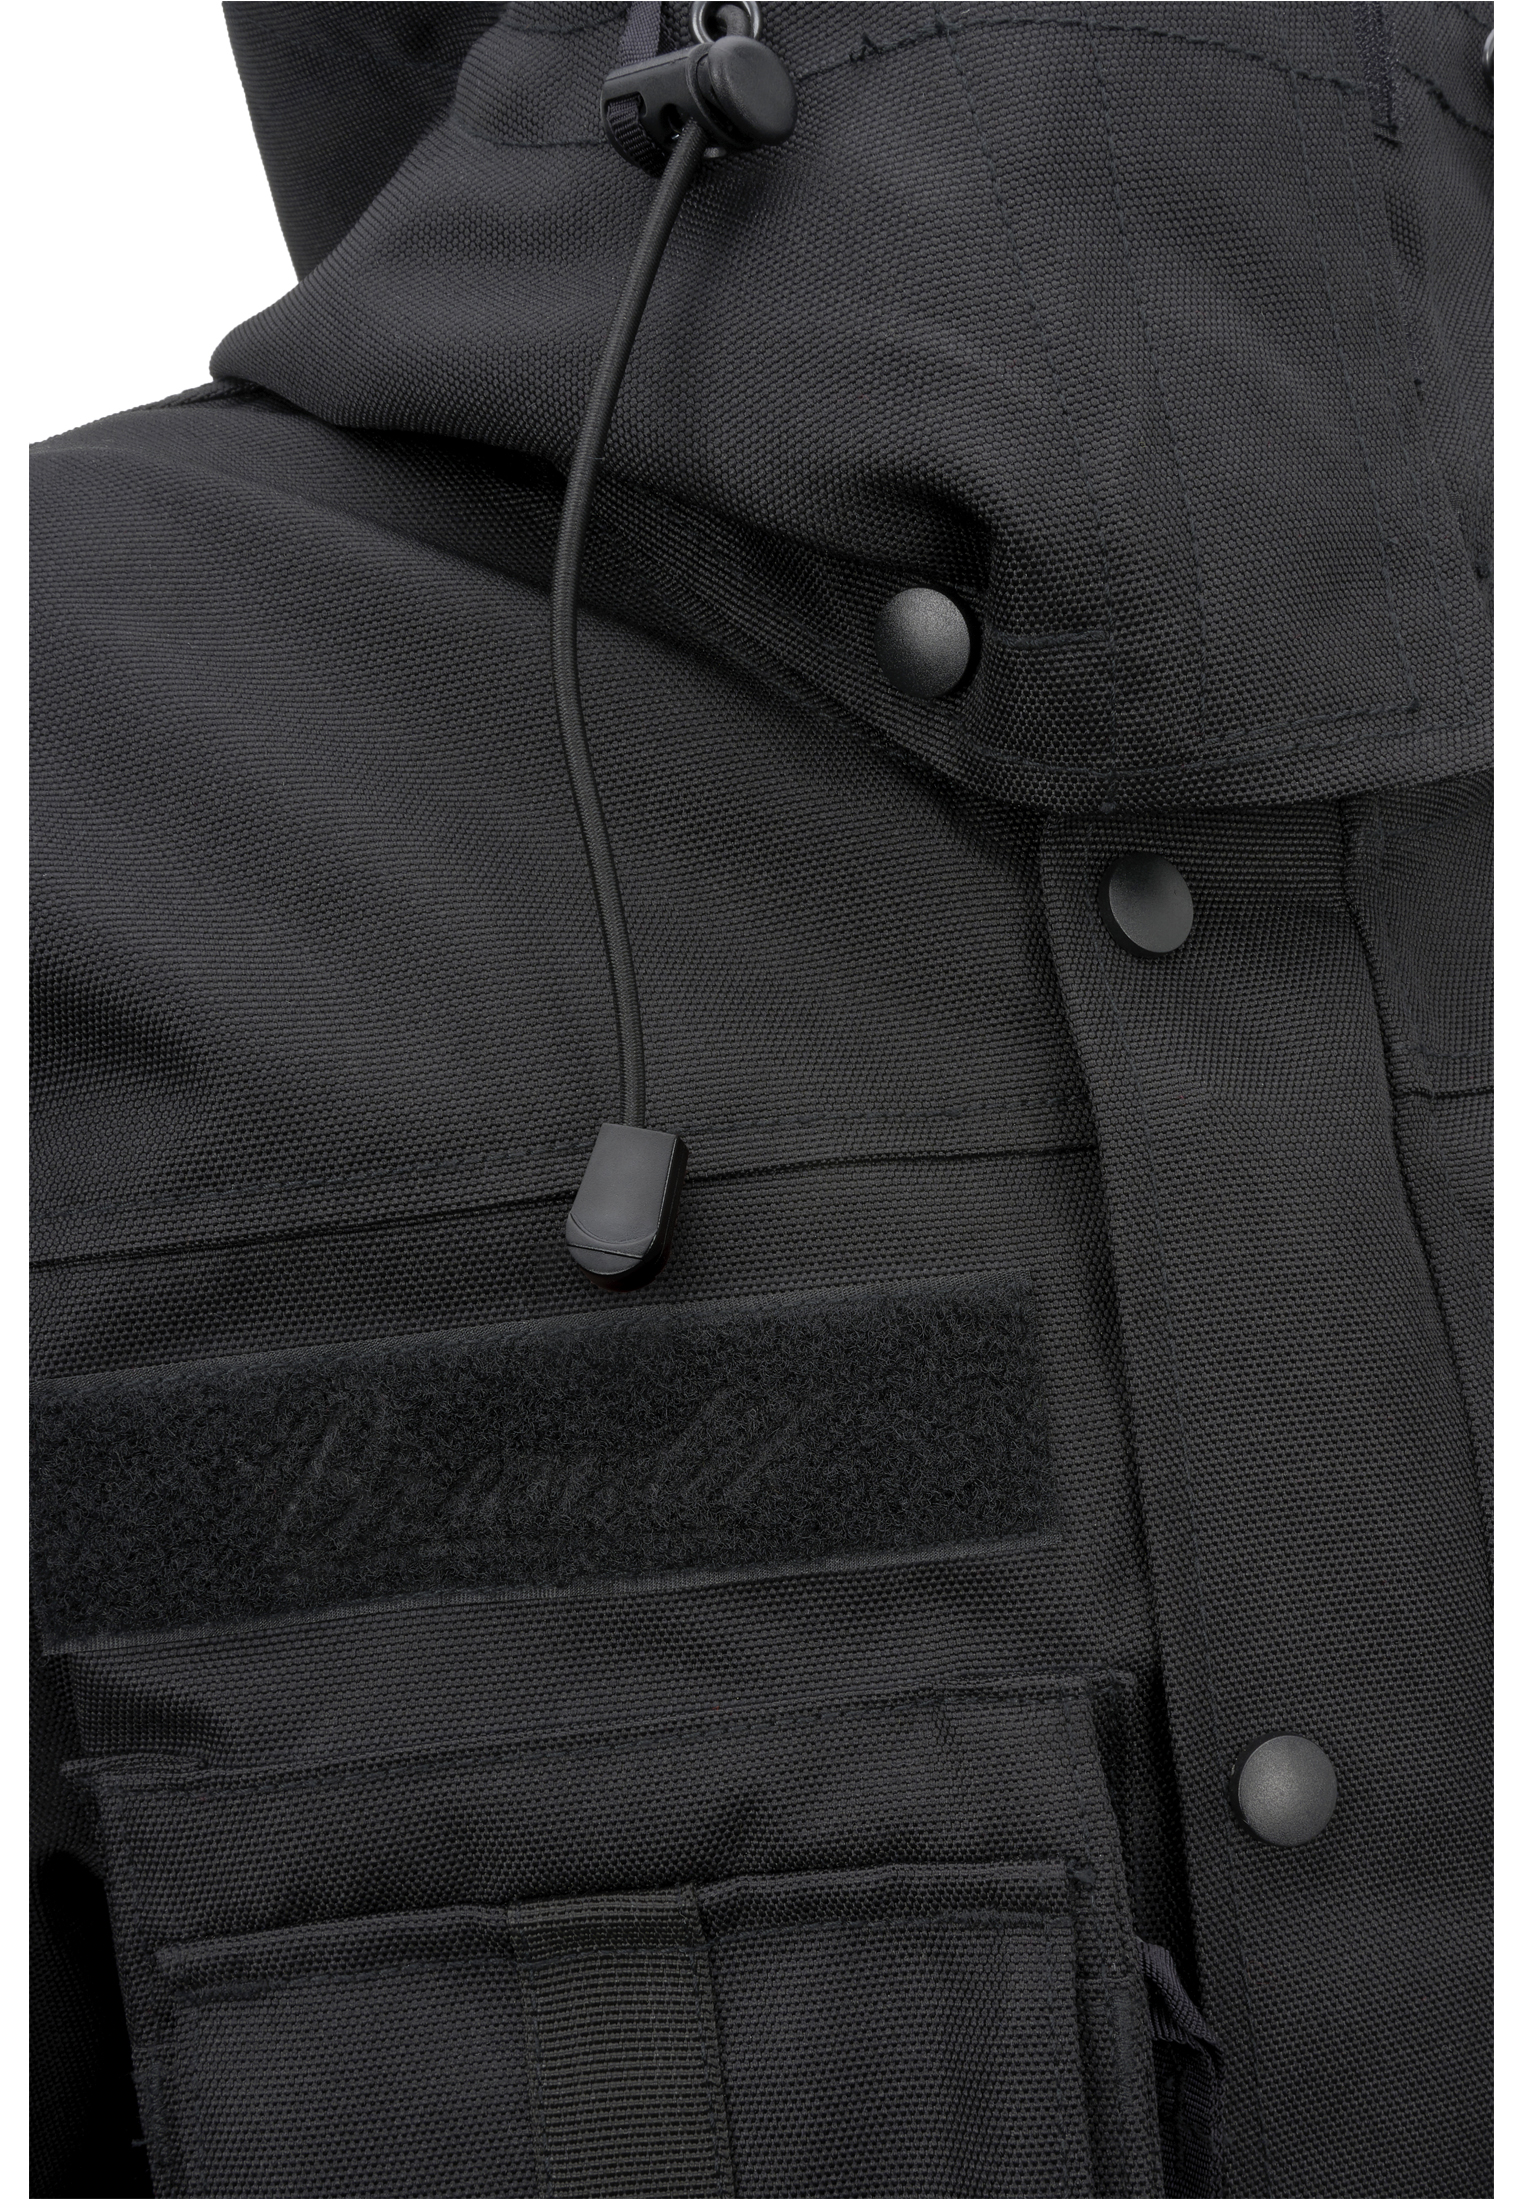 Jacken Performance Outdoorjacket in Farbe black